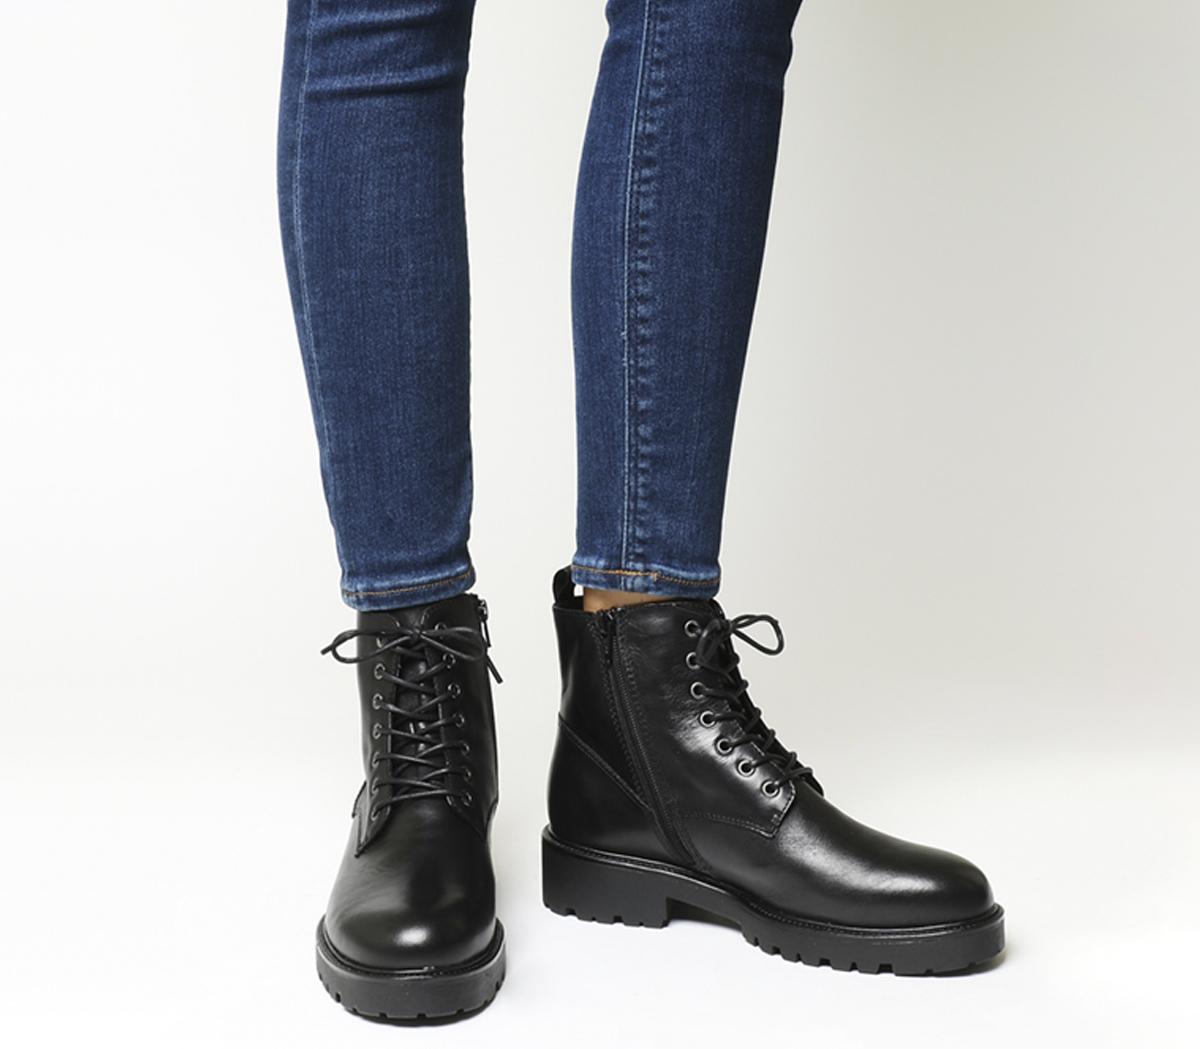 vagabond winter boots